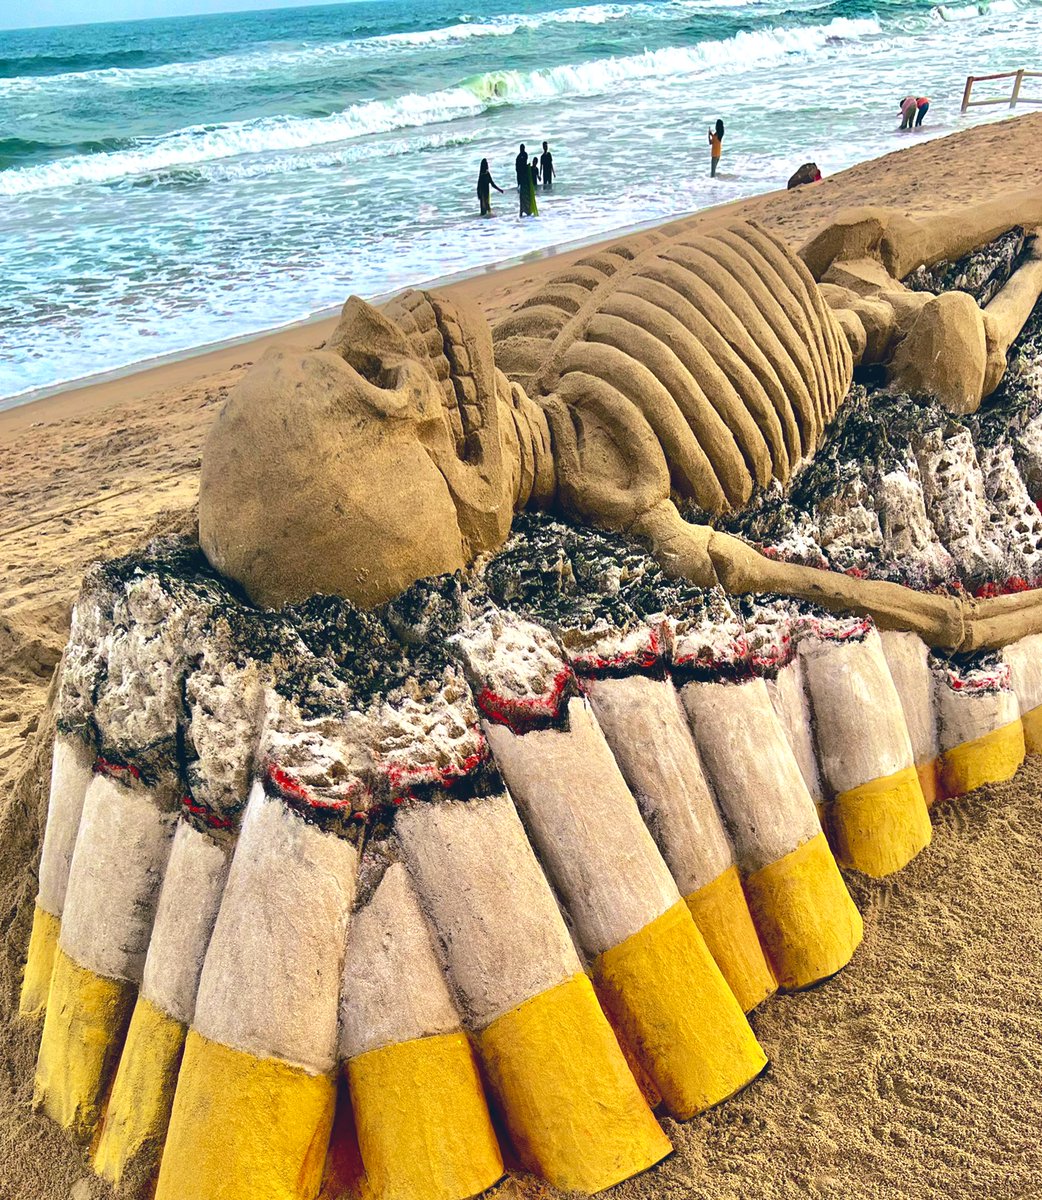 On the occasion of #WorldNoTobaccoDay. My SandArt at Puri beach in Odisha, India 
Say #NoTobacco 🚭